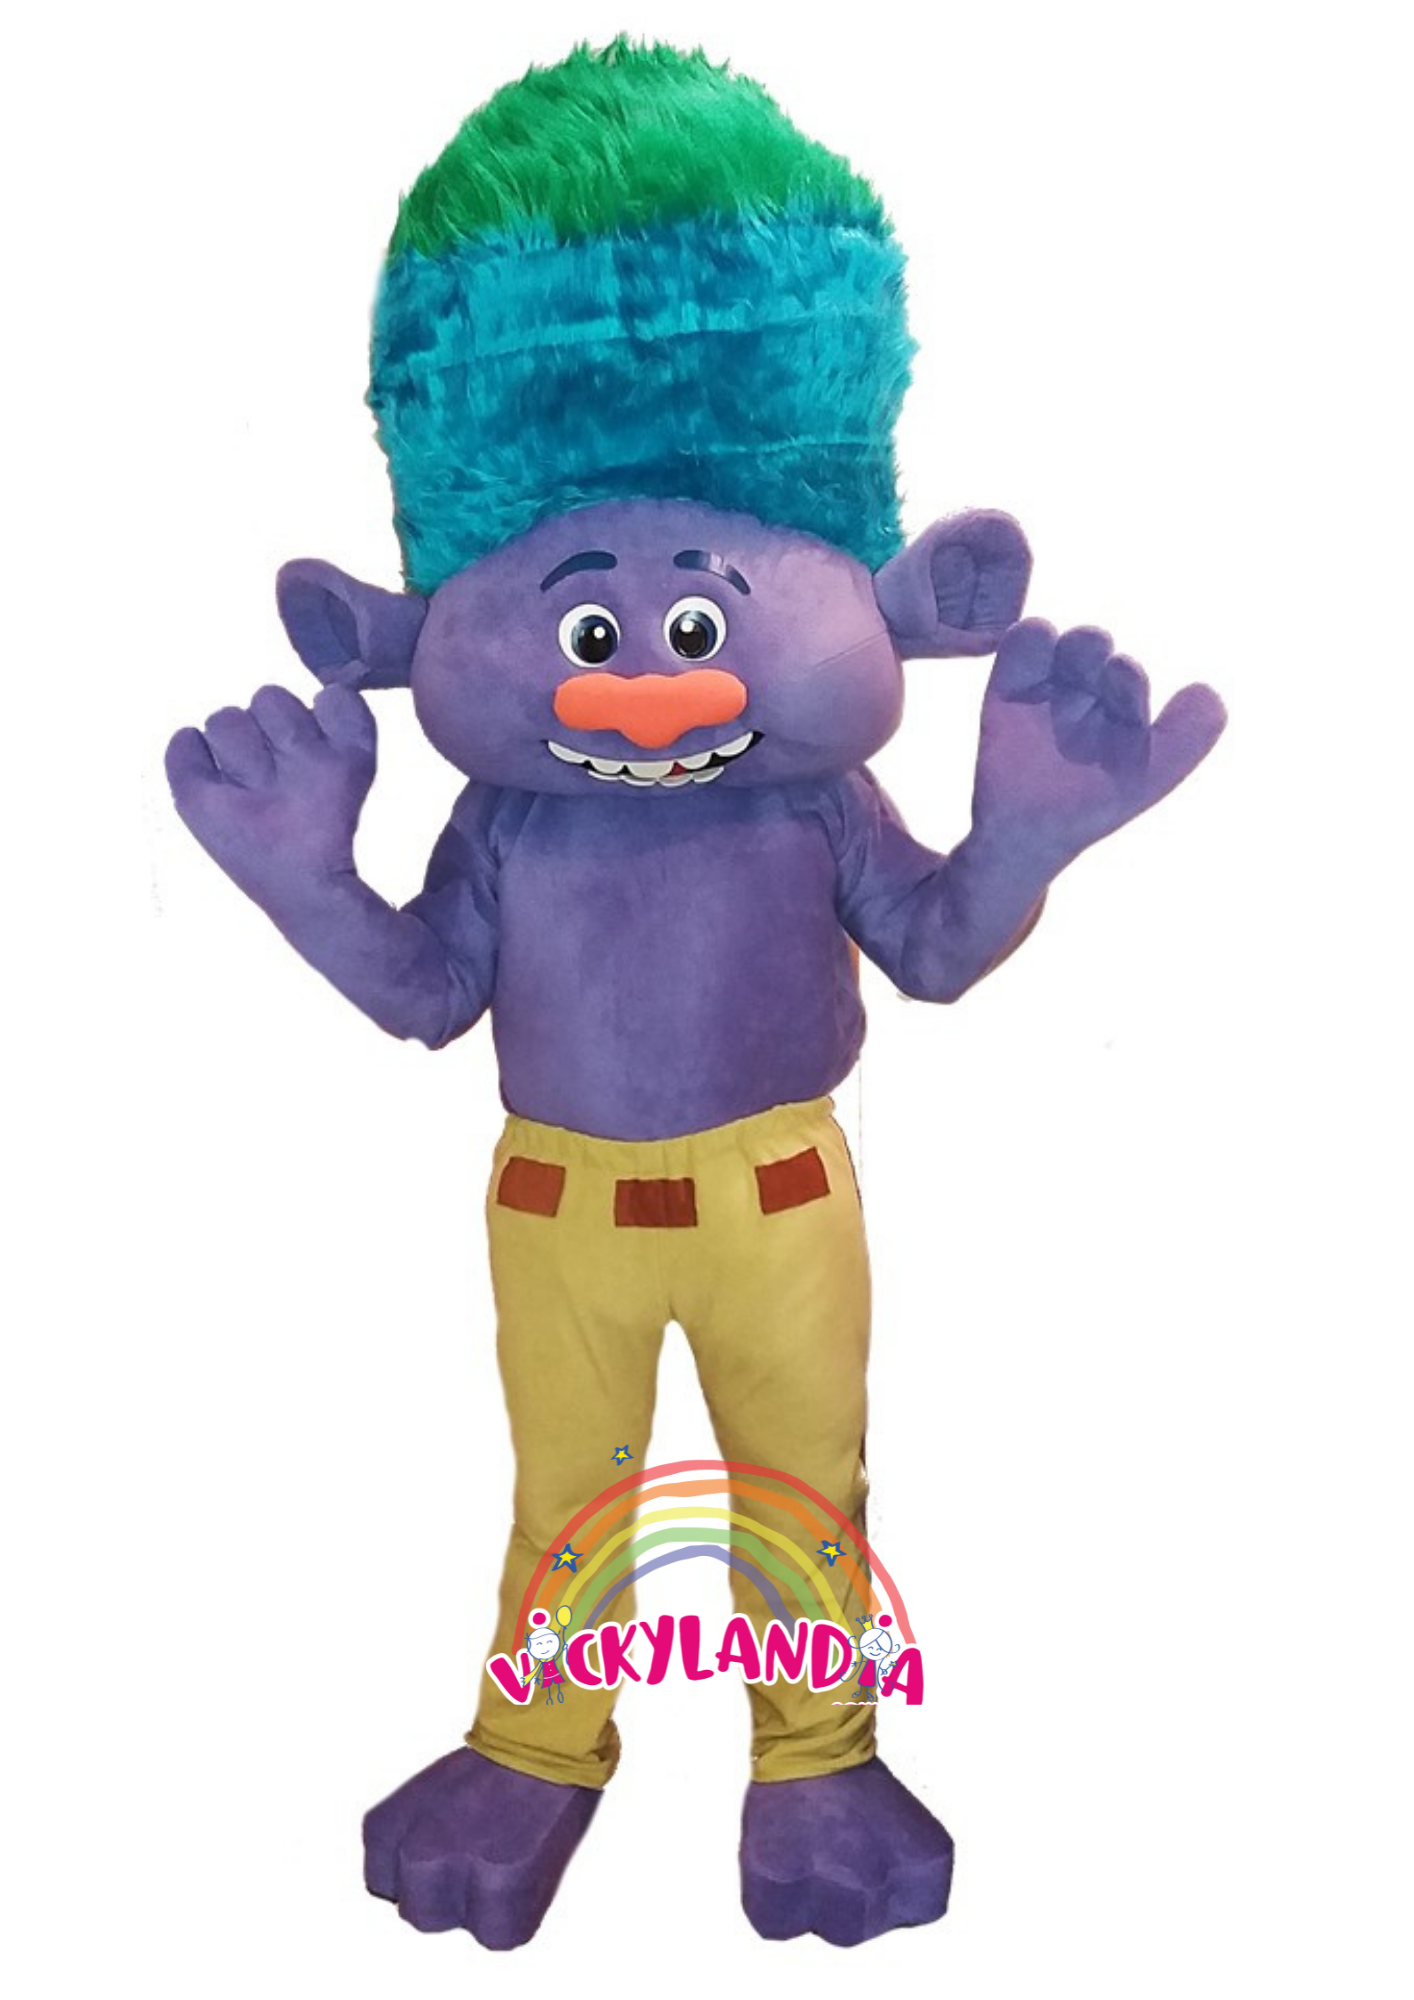 troll morado disfraz muñeco cabezon cabezudo botarga mascota publicitaria Peluches personalizados Merchandising corporativos  personalizados fabricante vickylandia